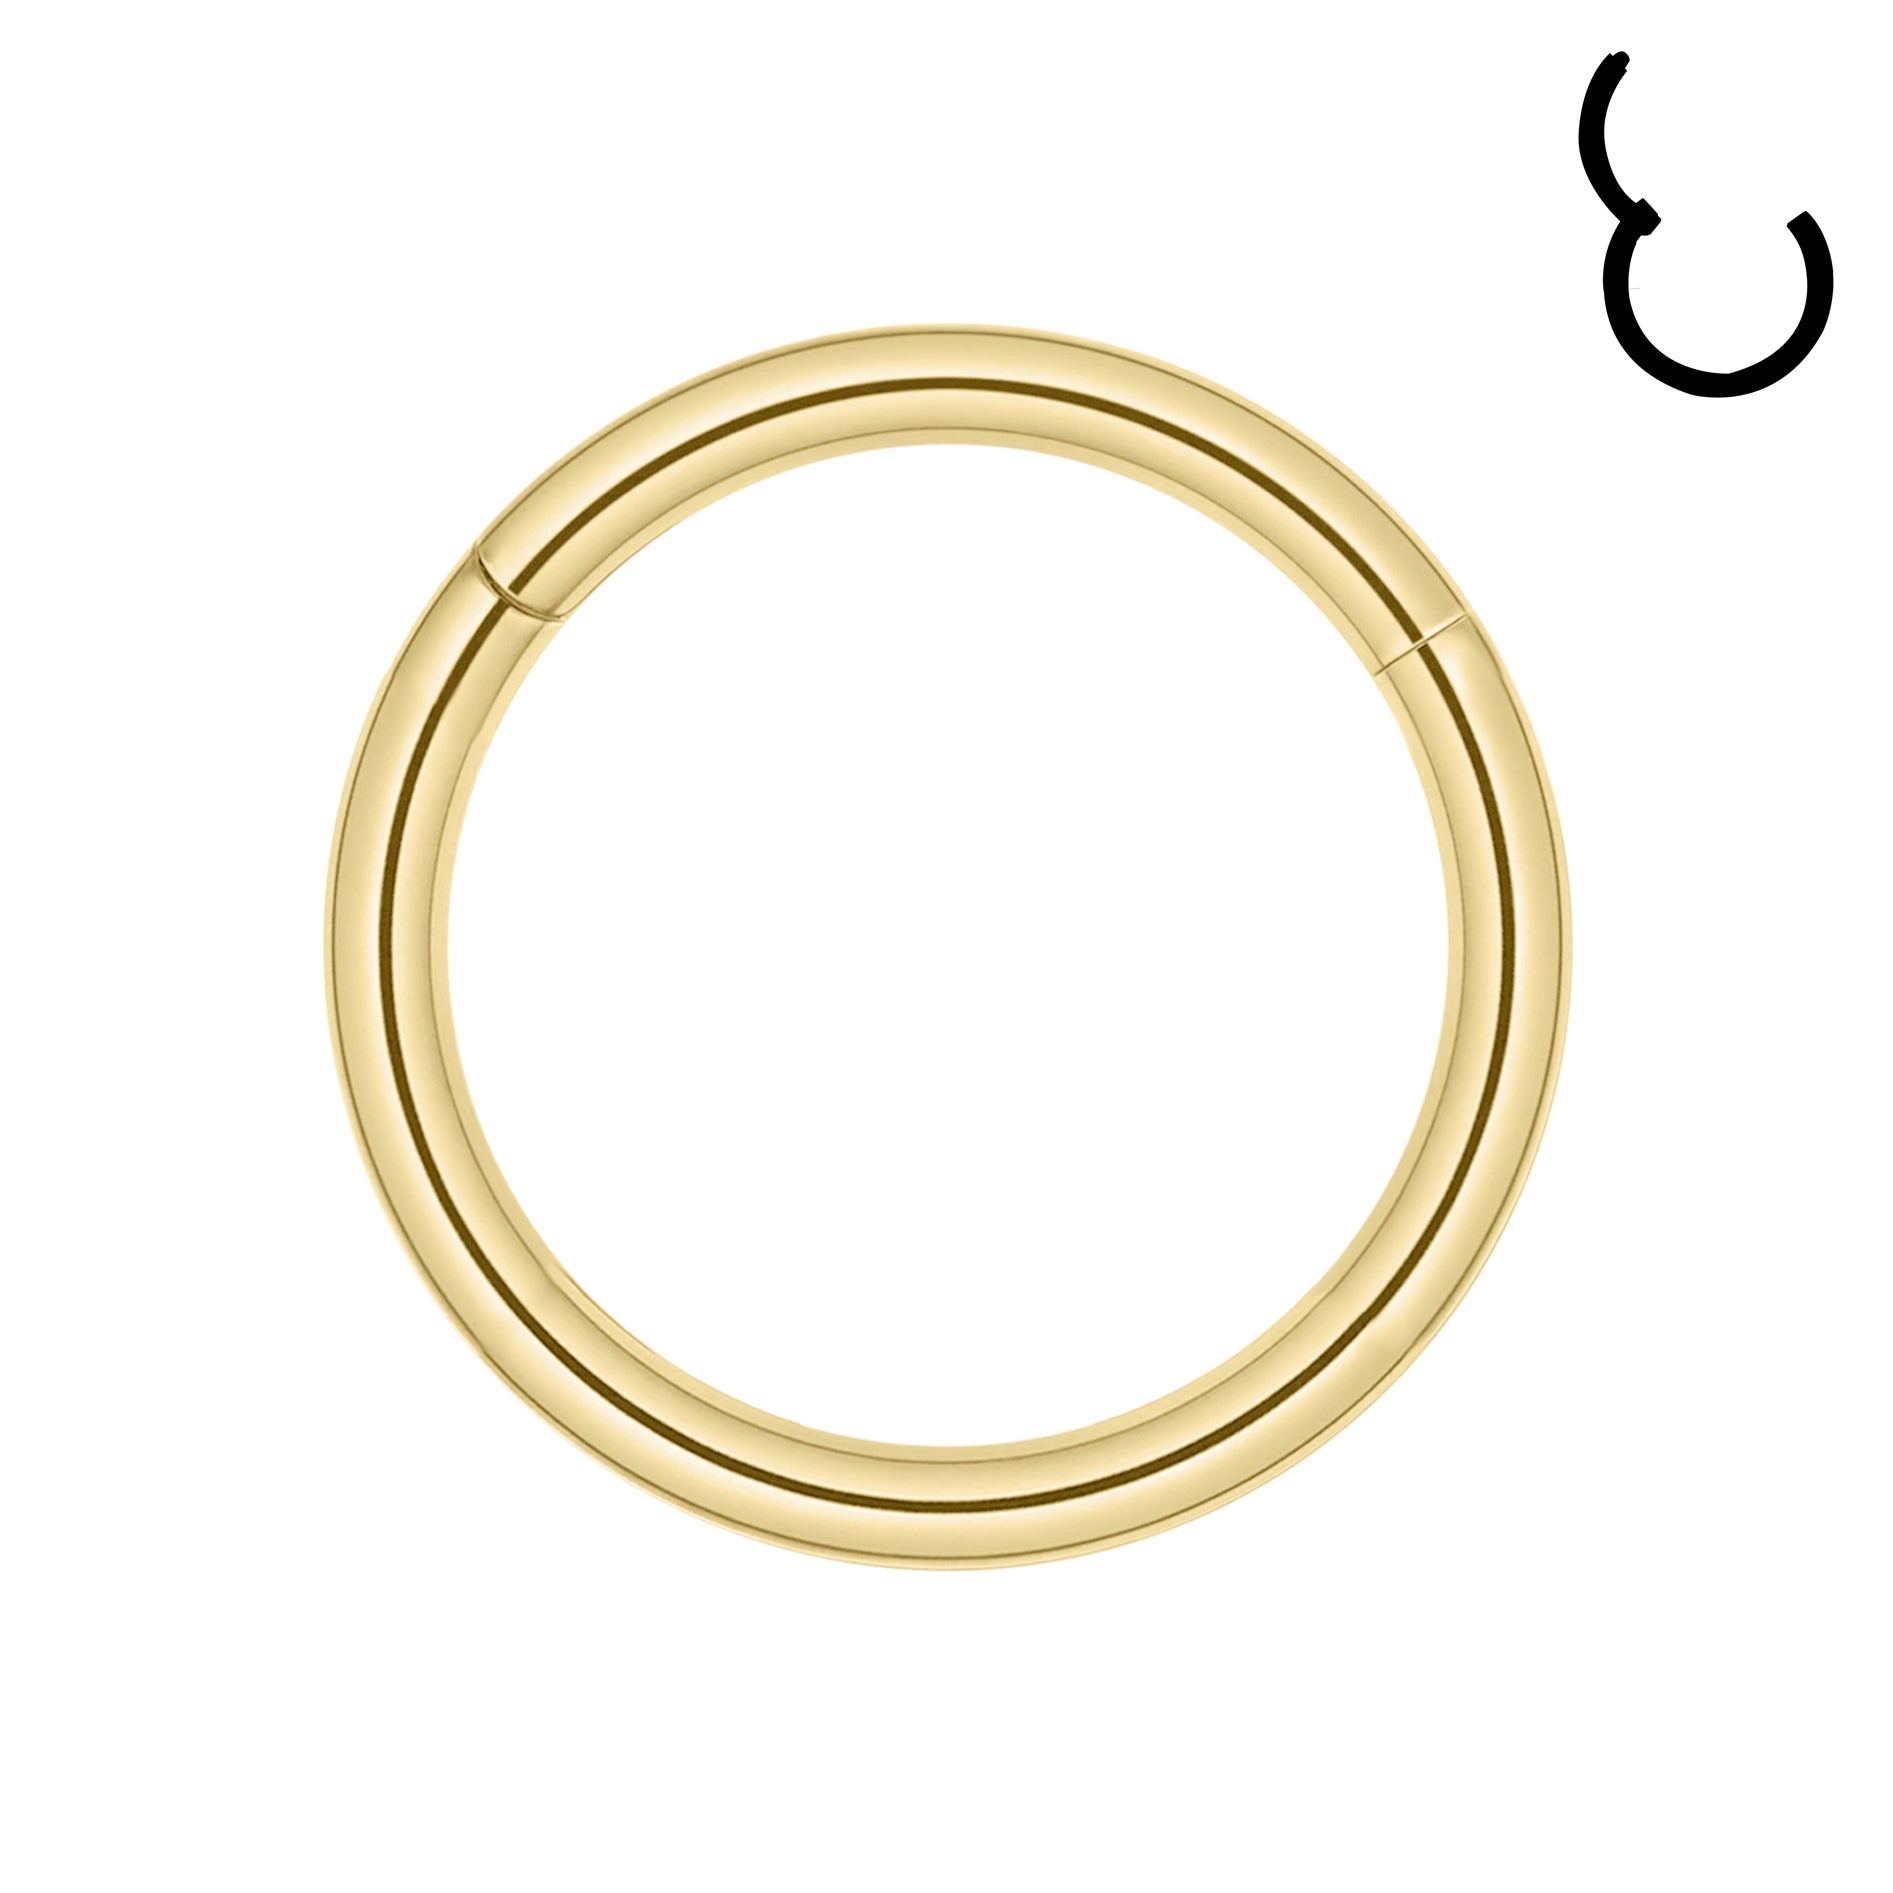 16g-gold-color-nose-clicker-septum-ring-basic-helix-cartilage-piercing